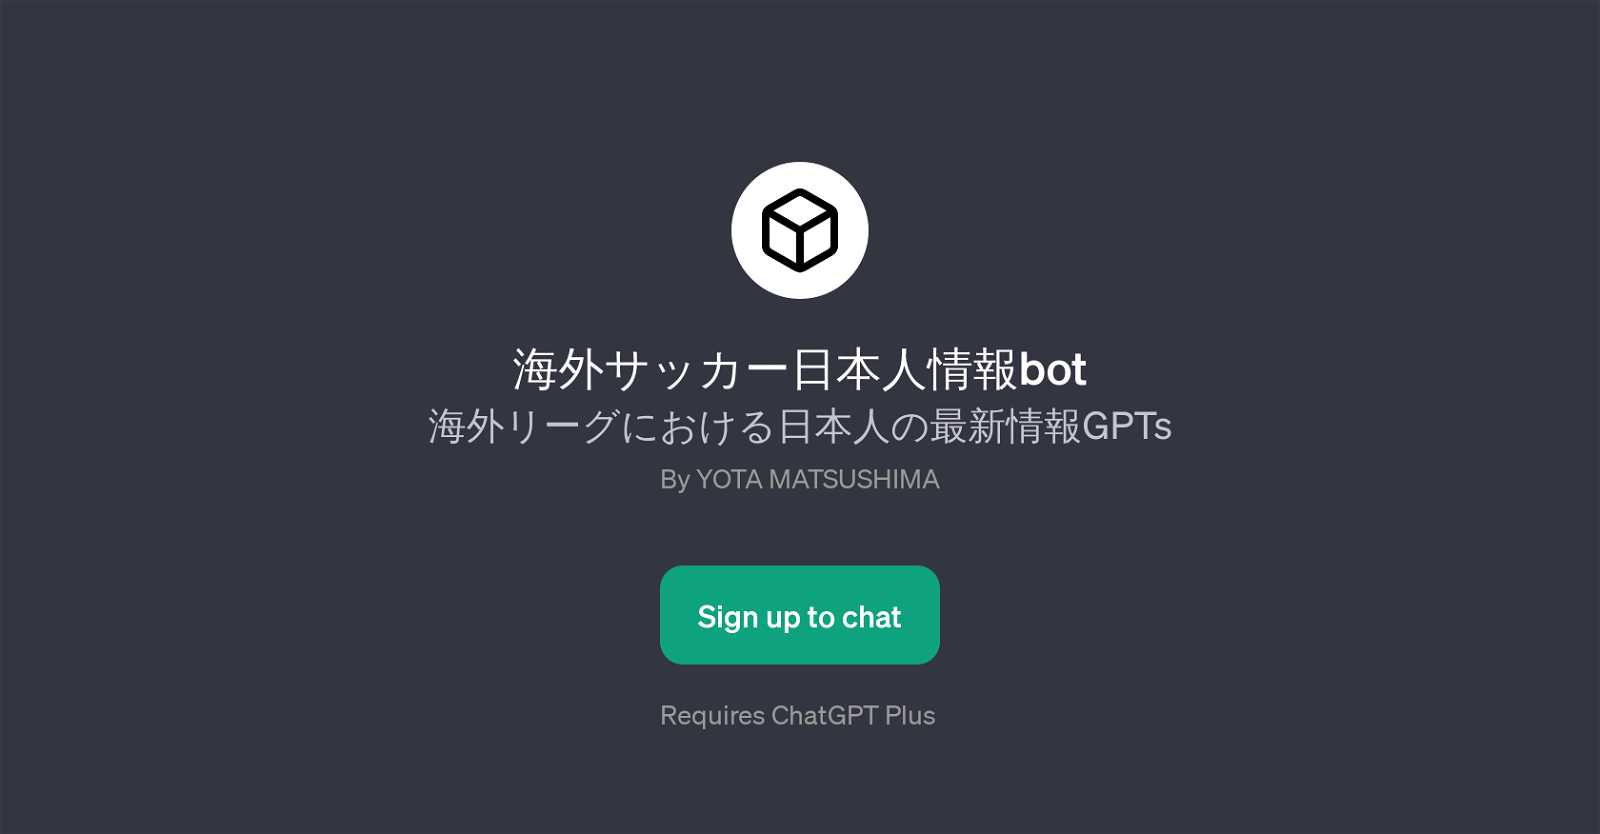 bot GPT website